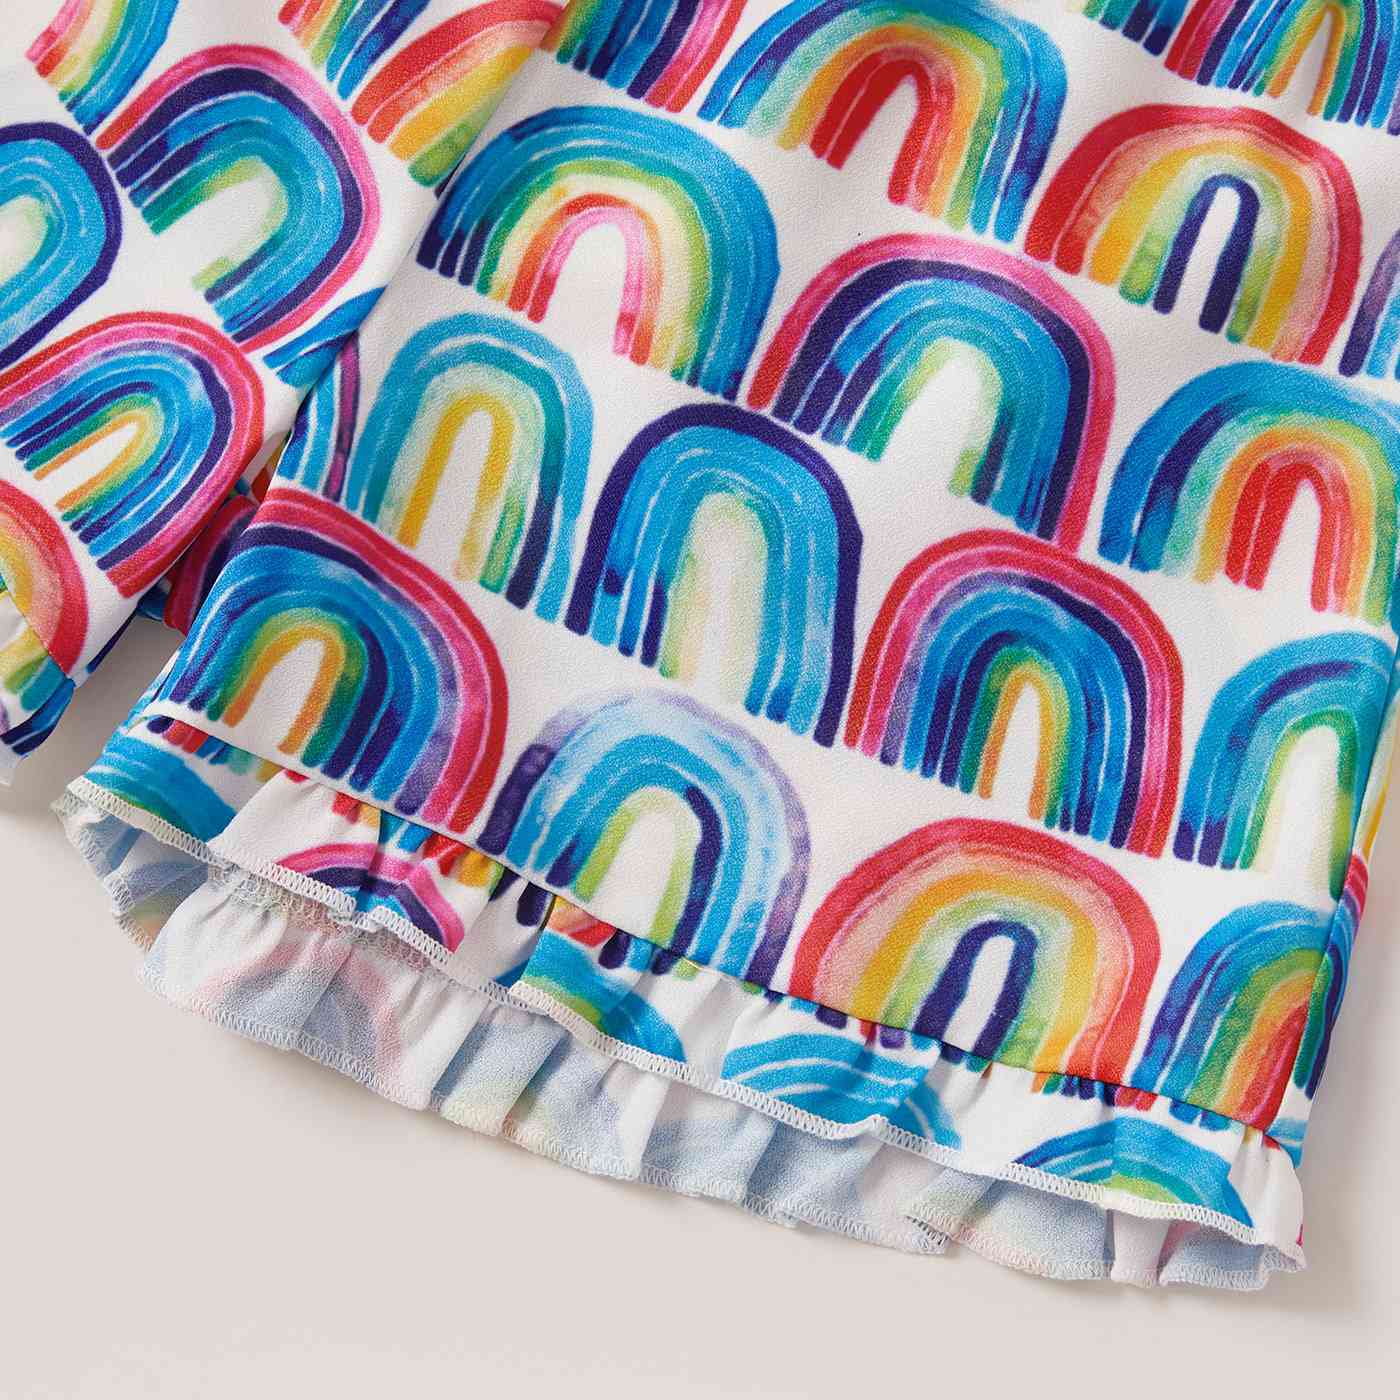 Asymmetrical Neck Top and Rainbow Print Shorts Set